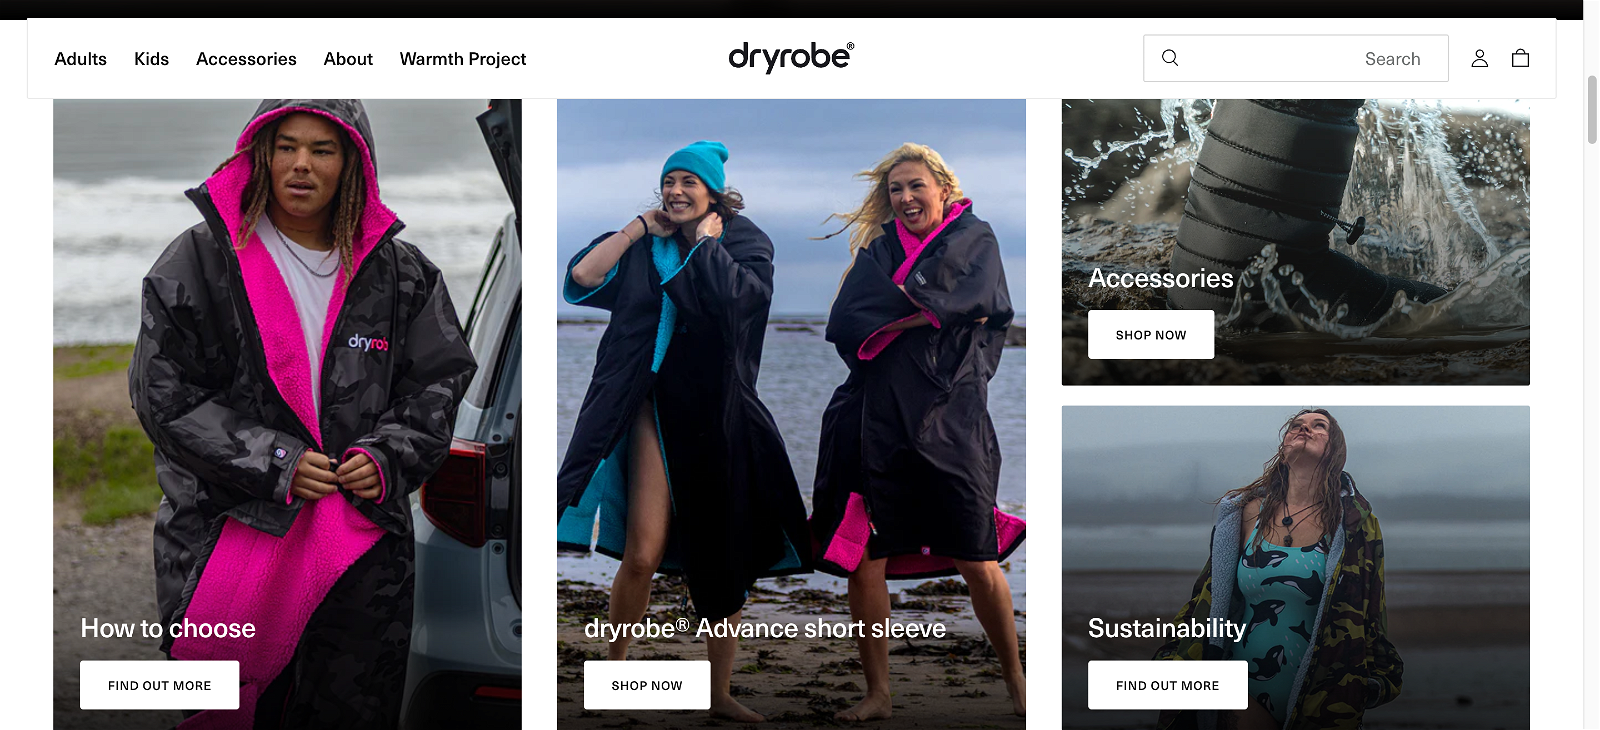 Dryrobe.com